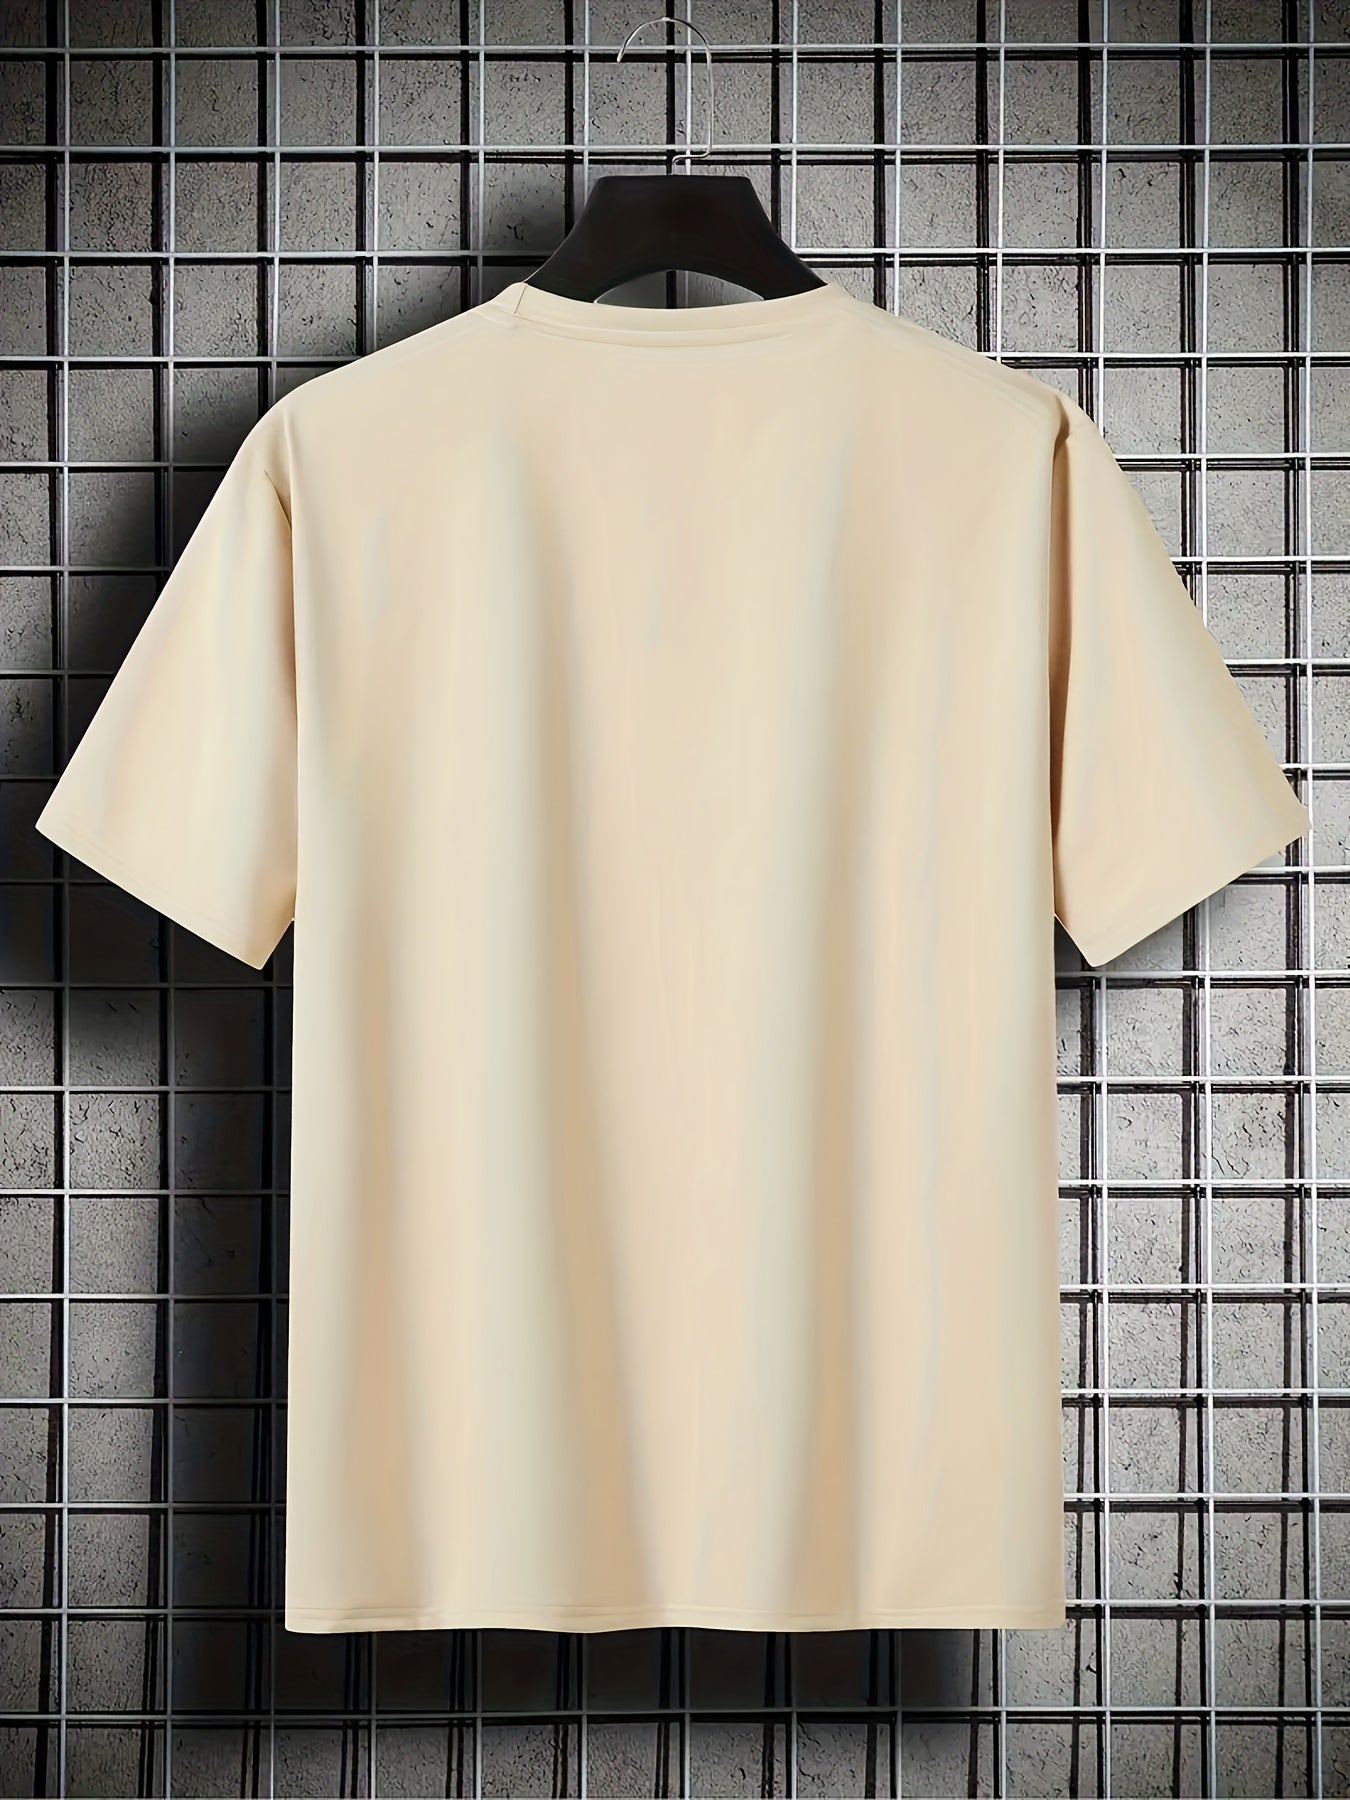 Trendy Gamer Print Boys Creative T-shirt, Casual Lightweight Comfy Short Sleeve Tee Tops, Kids Clothes For Summer